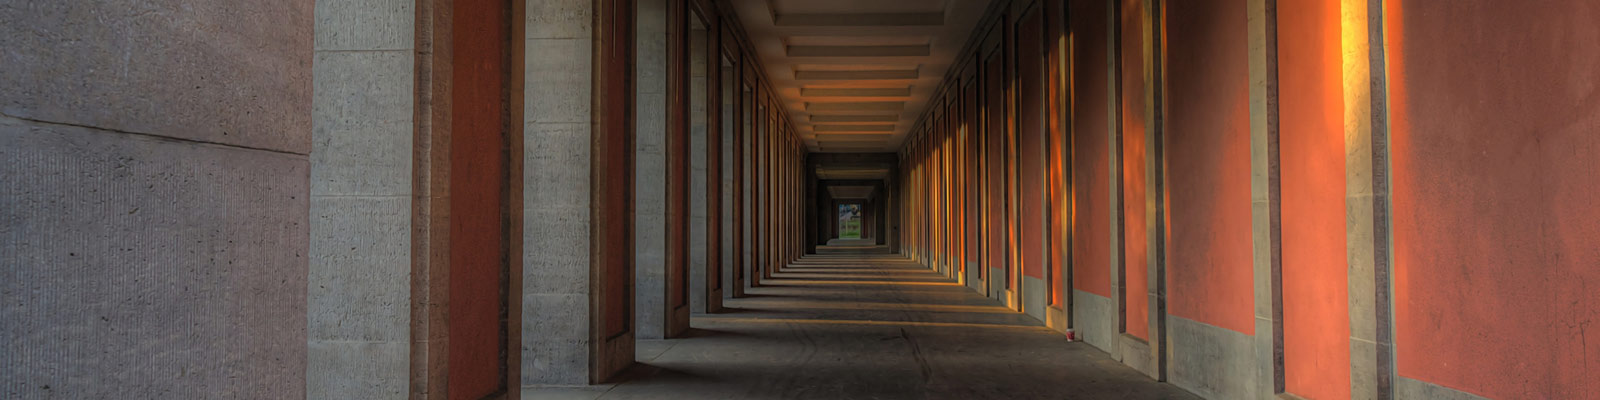 Bauhaus-Universität Weimar, Faculty of Civil Engineering